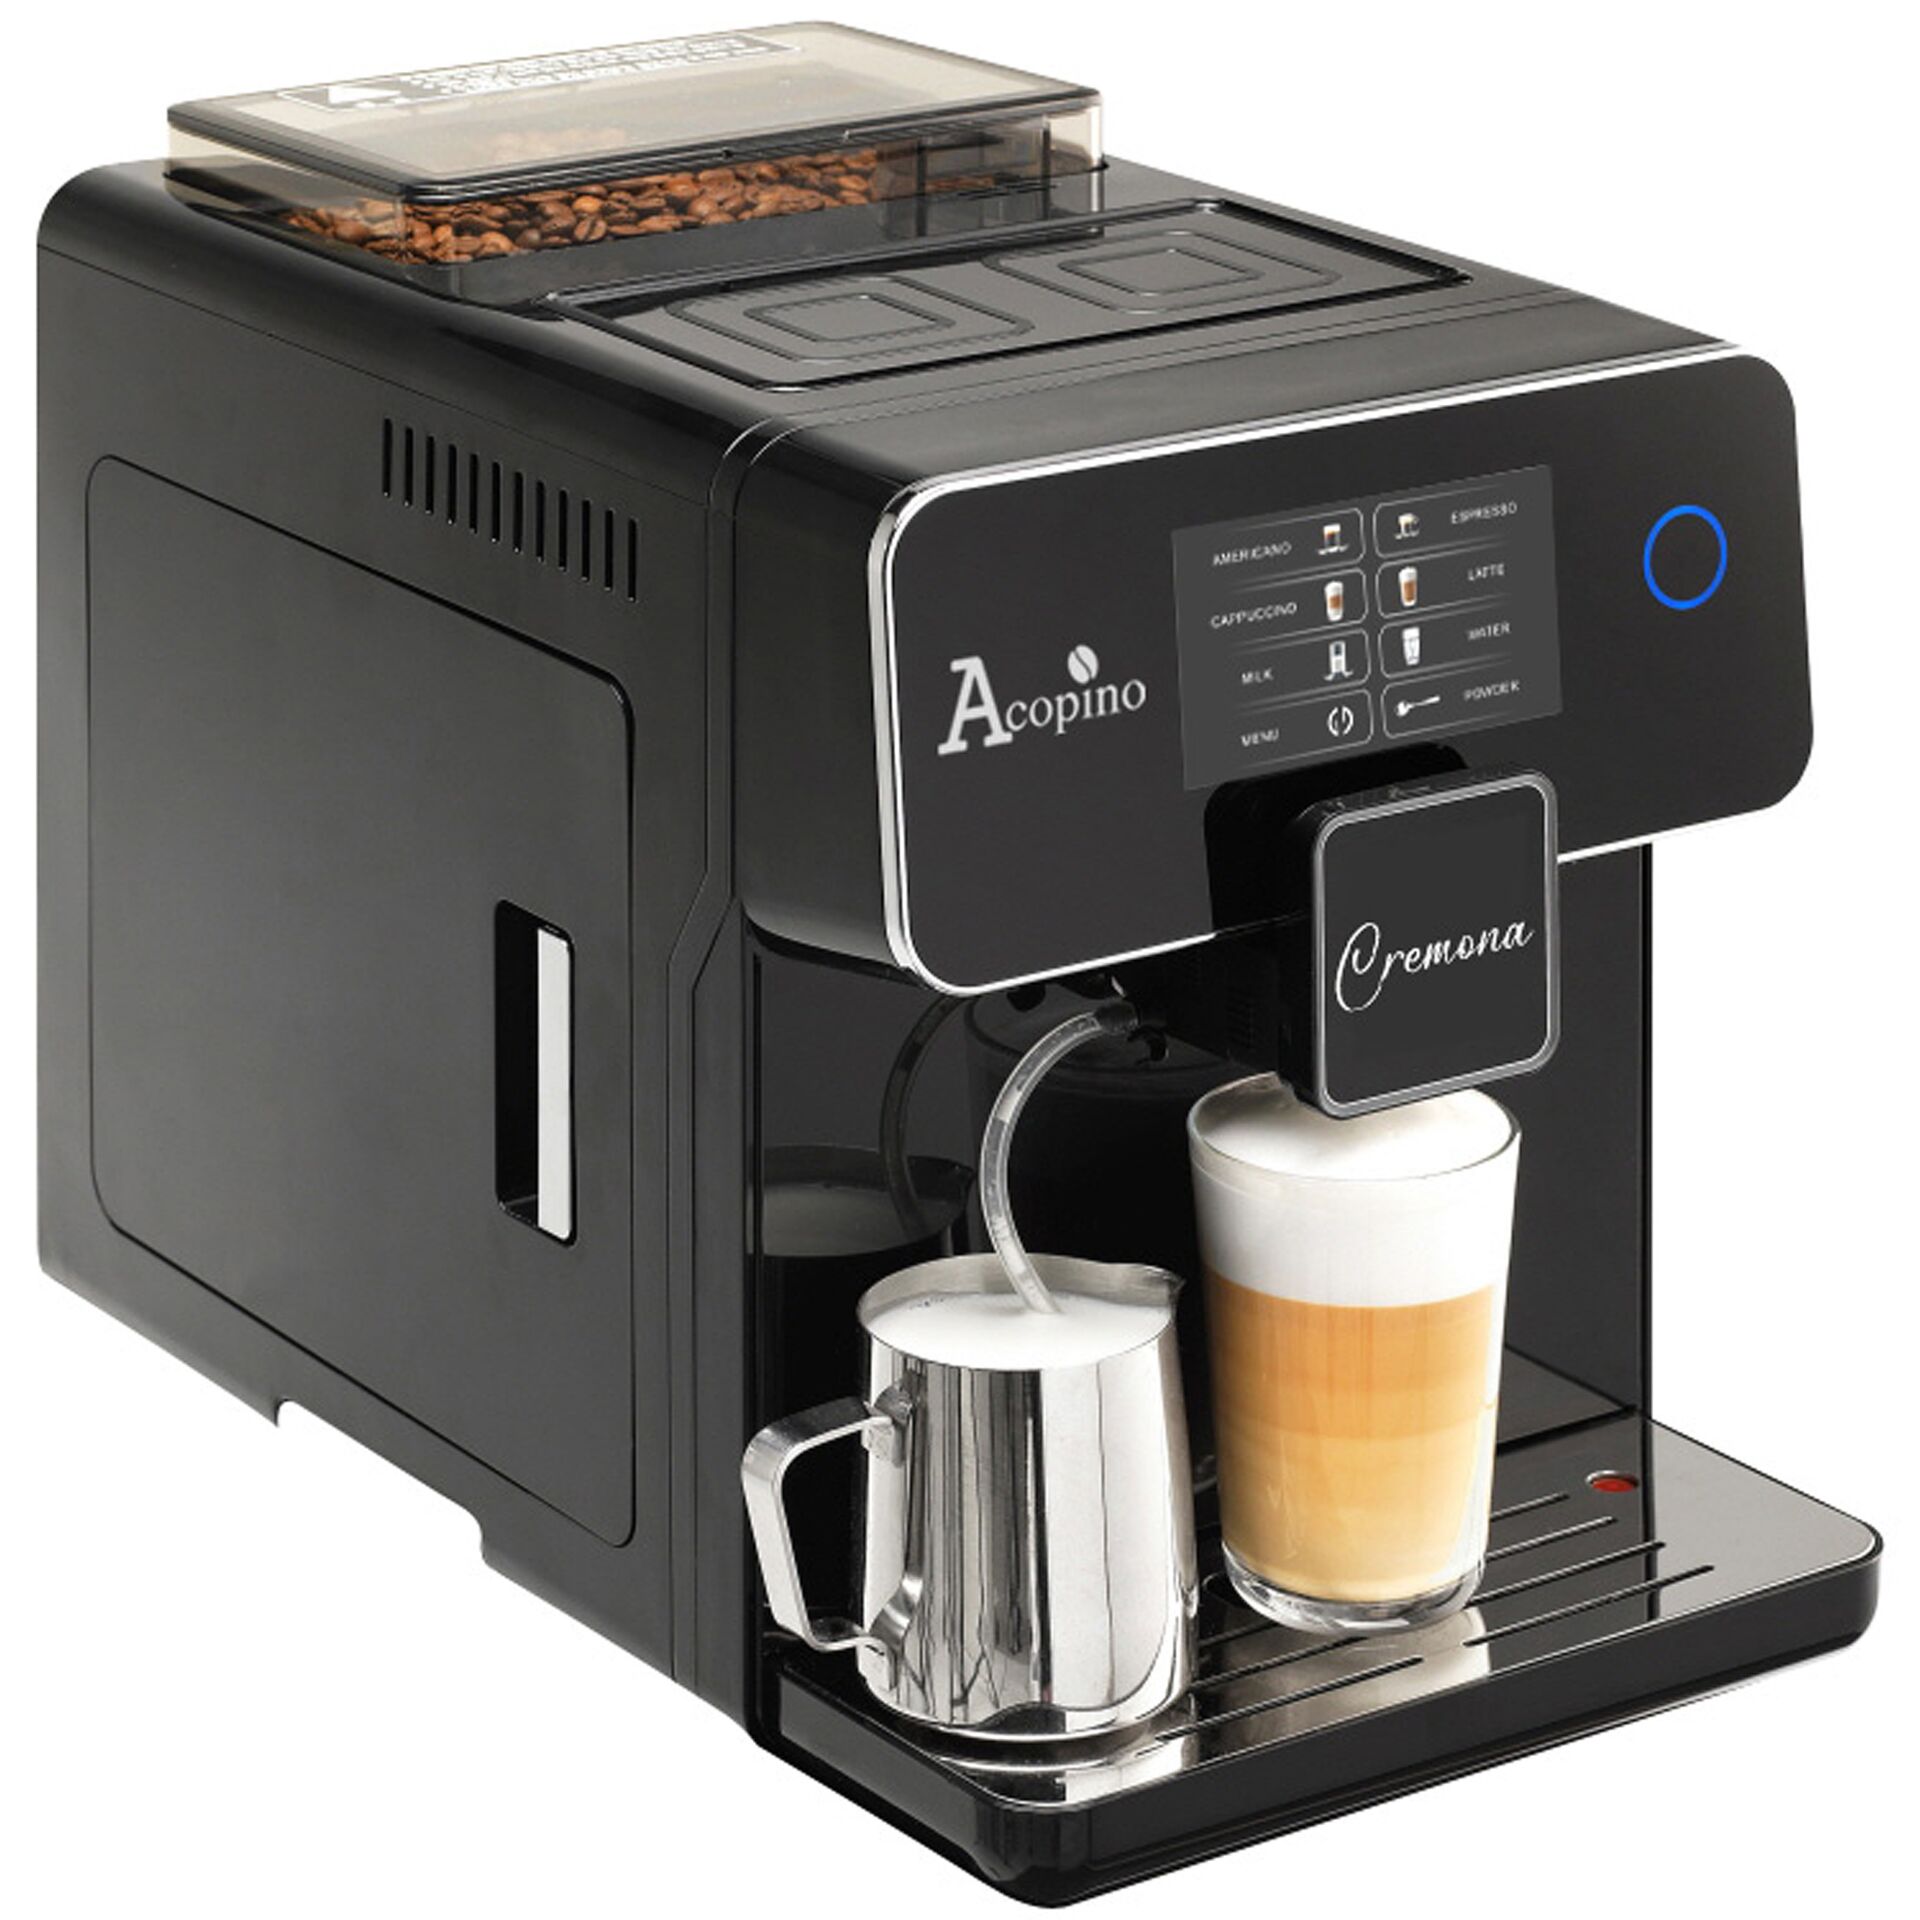 Acopino Cremona Vollautomatisch Espressomaschine 1,7 l